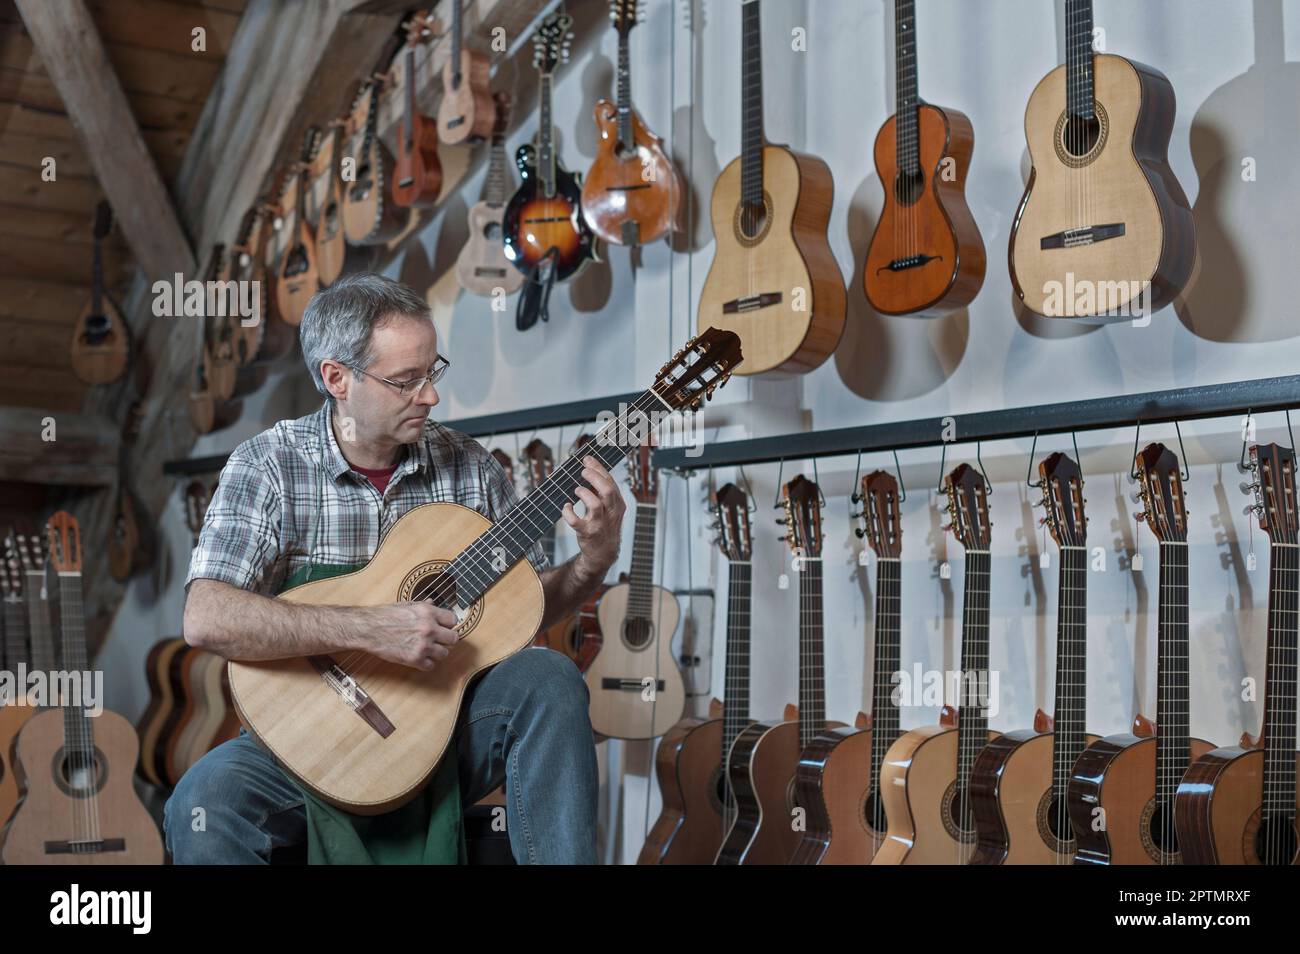 Guitar maker tuning guitar in music store Stock Photo